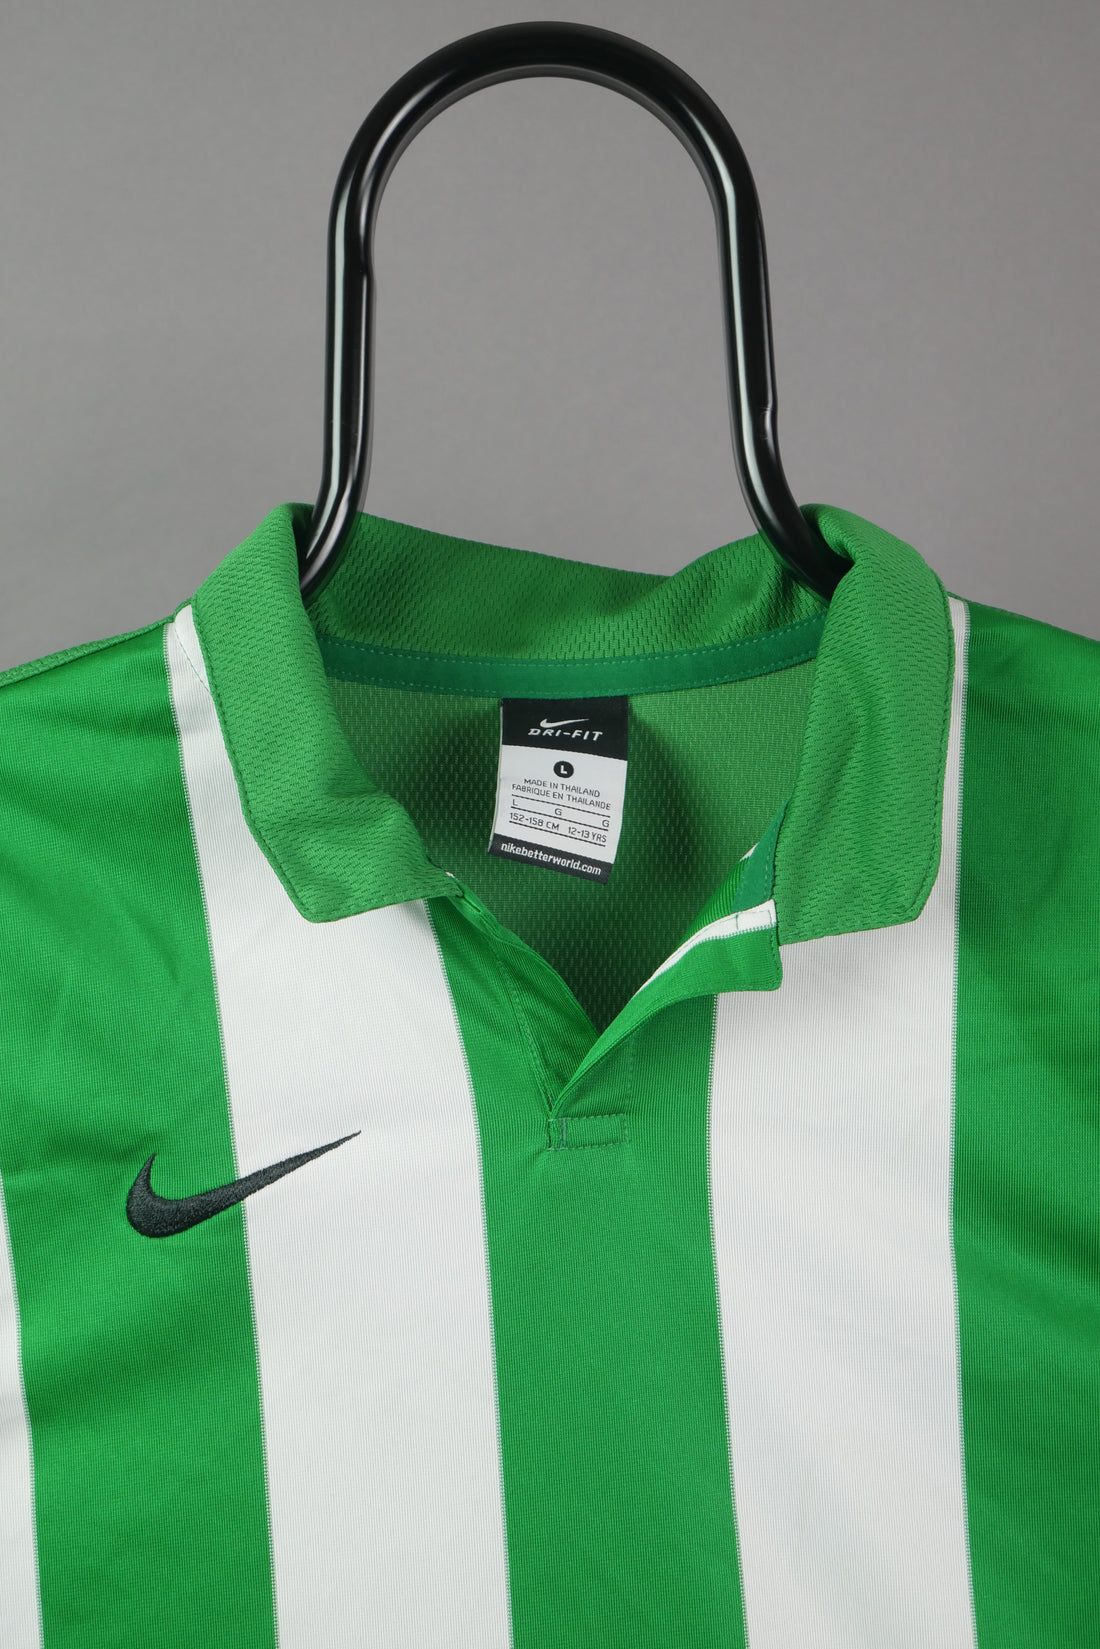 The Nike Long Sleeve Football Shirt (XS)